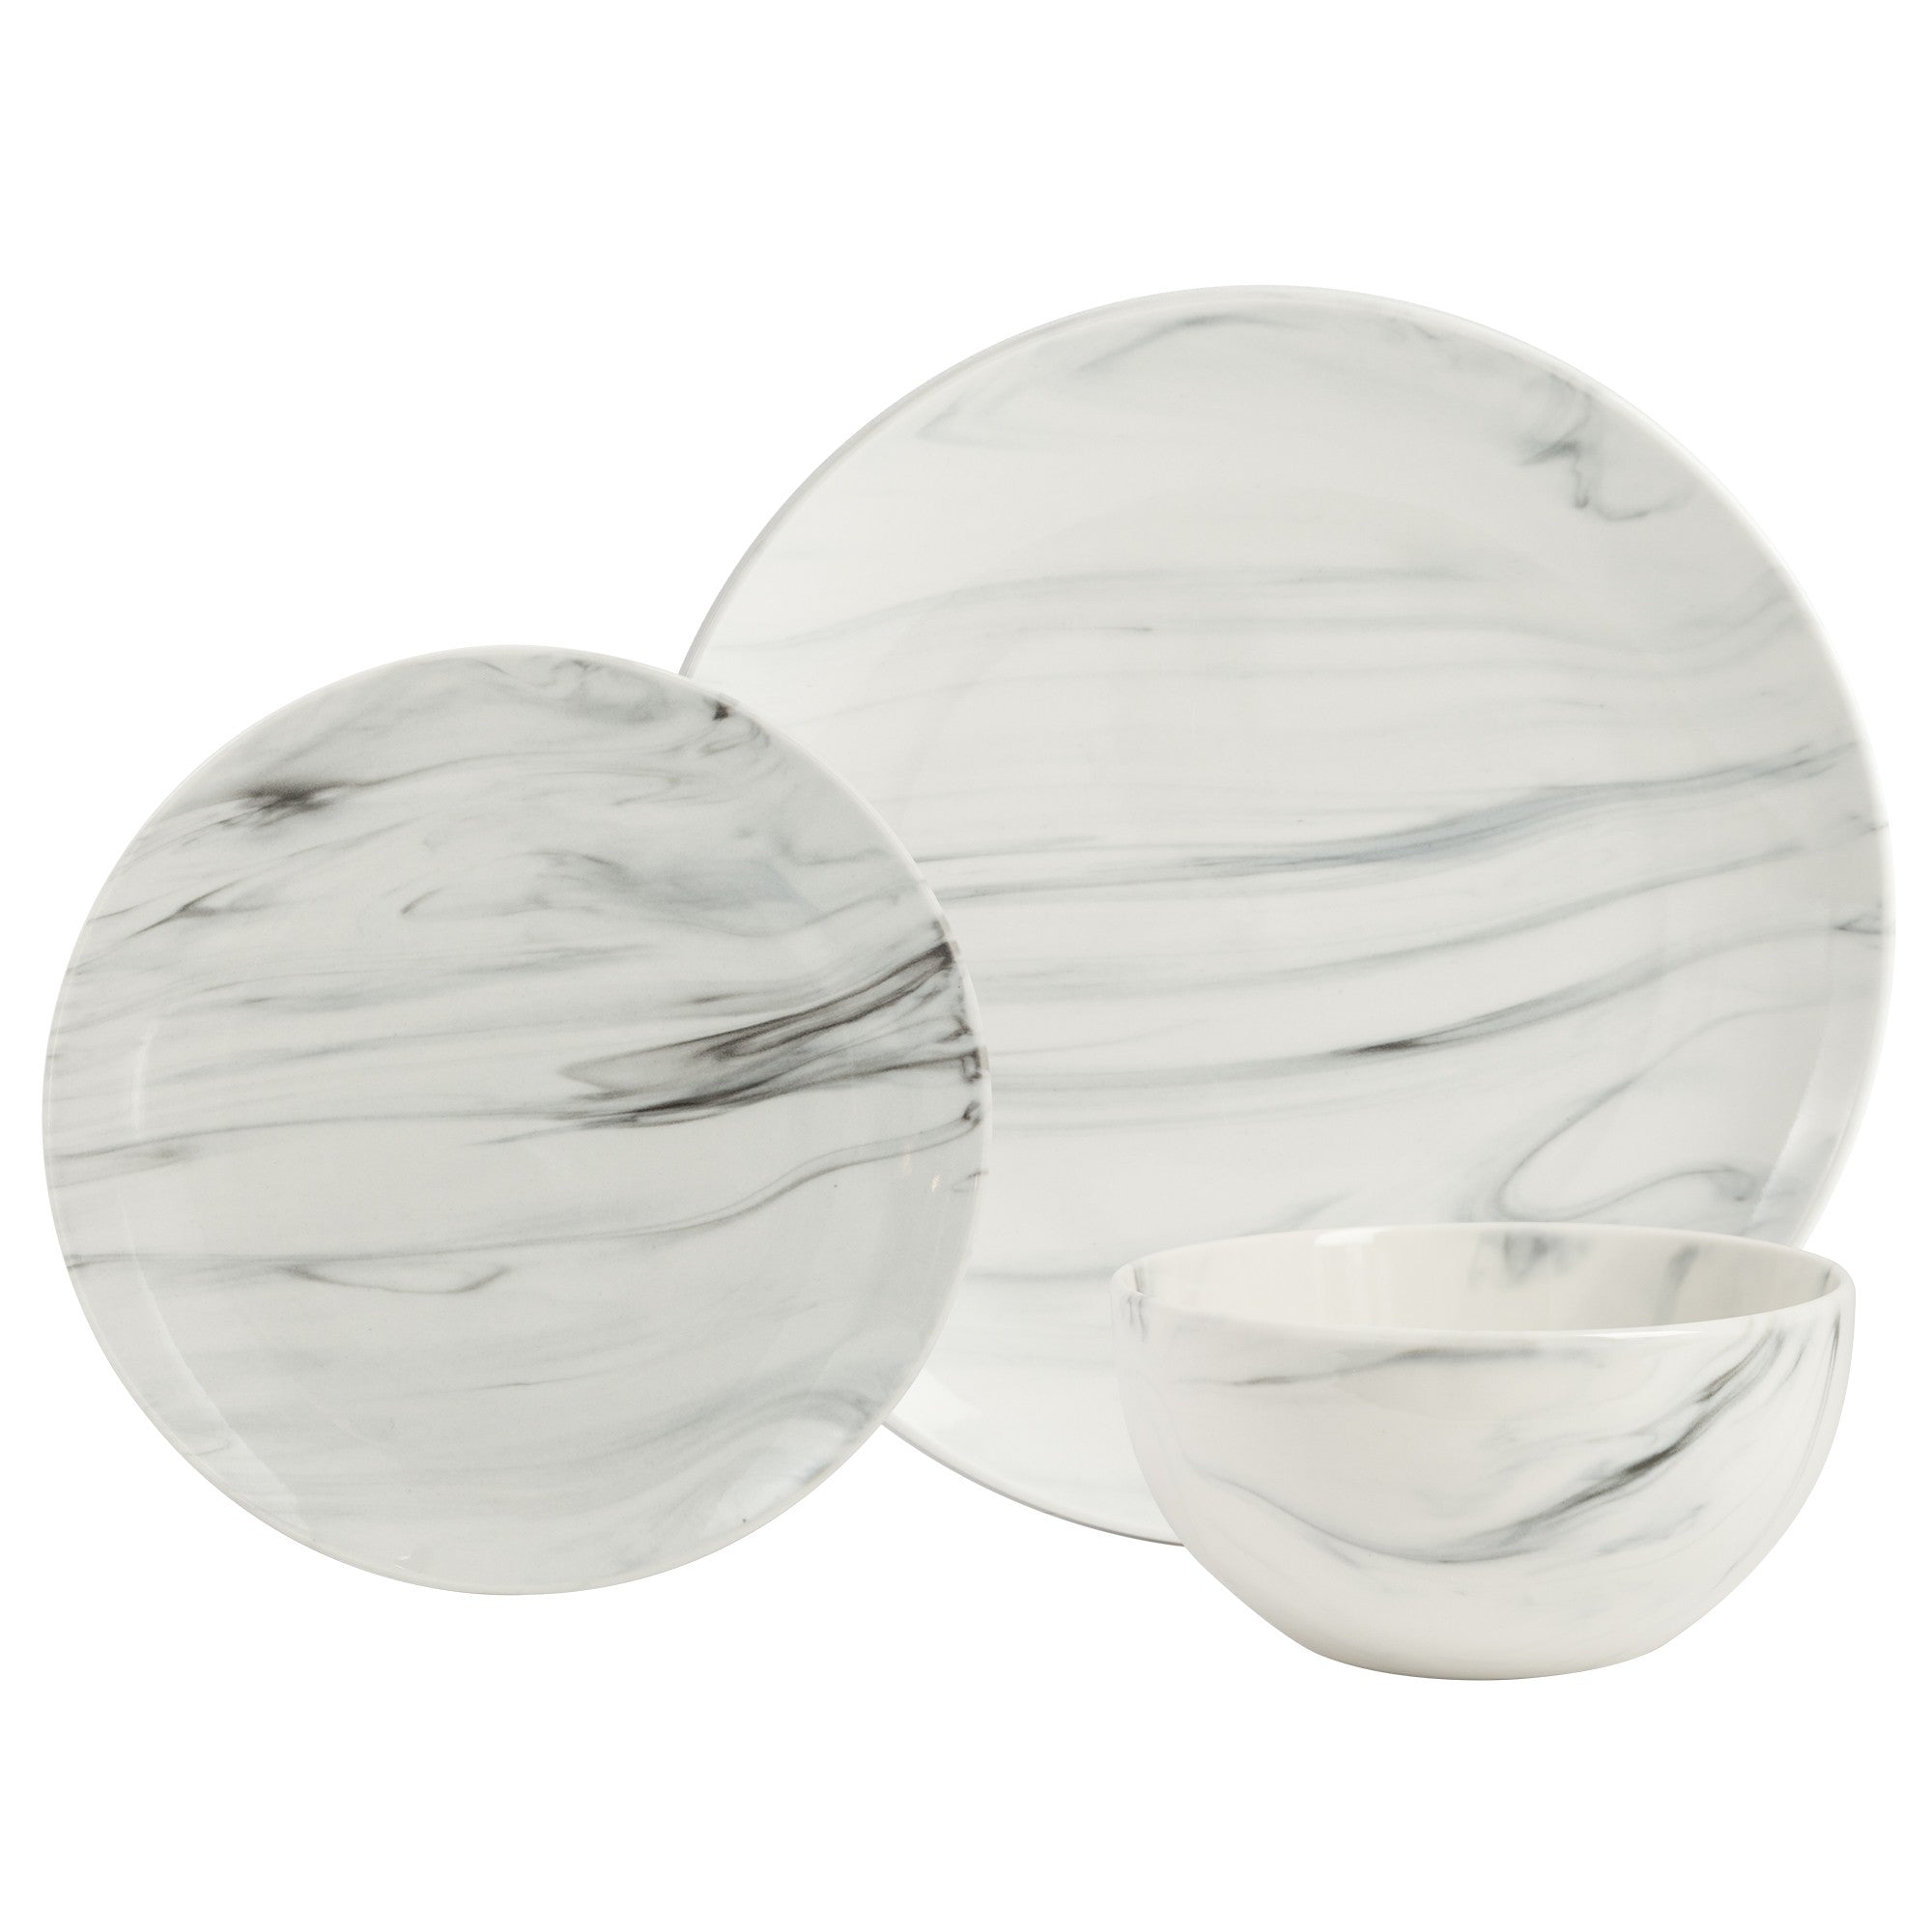 title:Safdie & Co. Dinnerset 12PC Coupe Porcelain Swirl;color:Multi